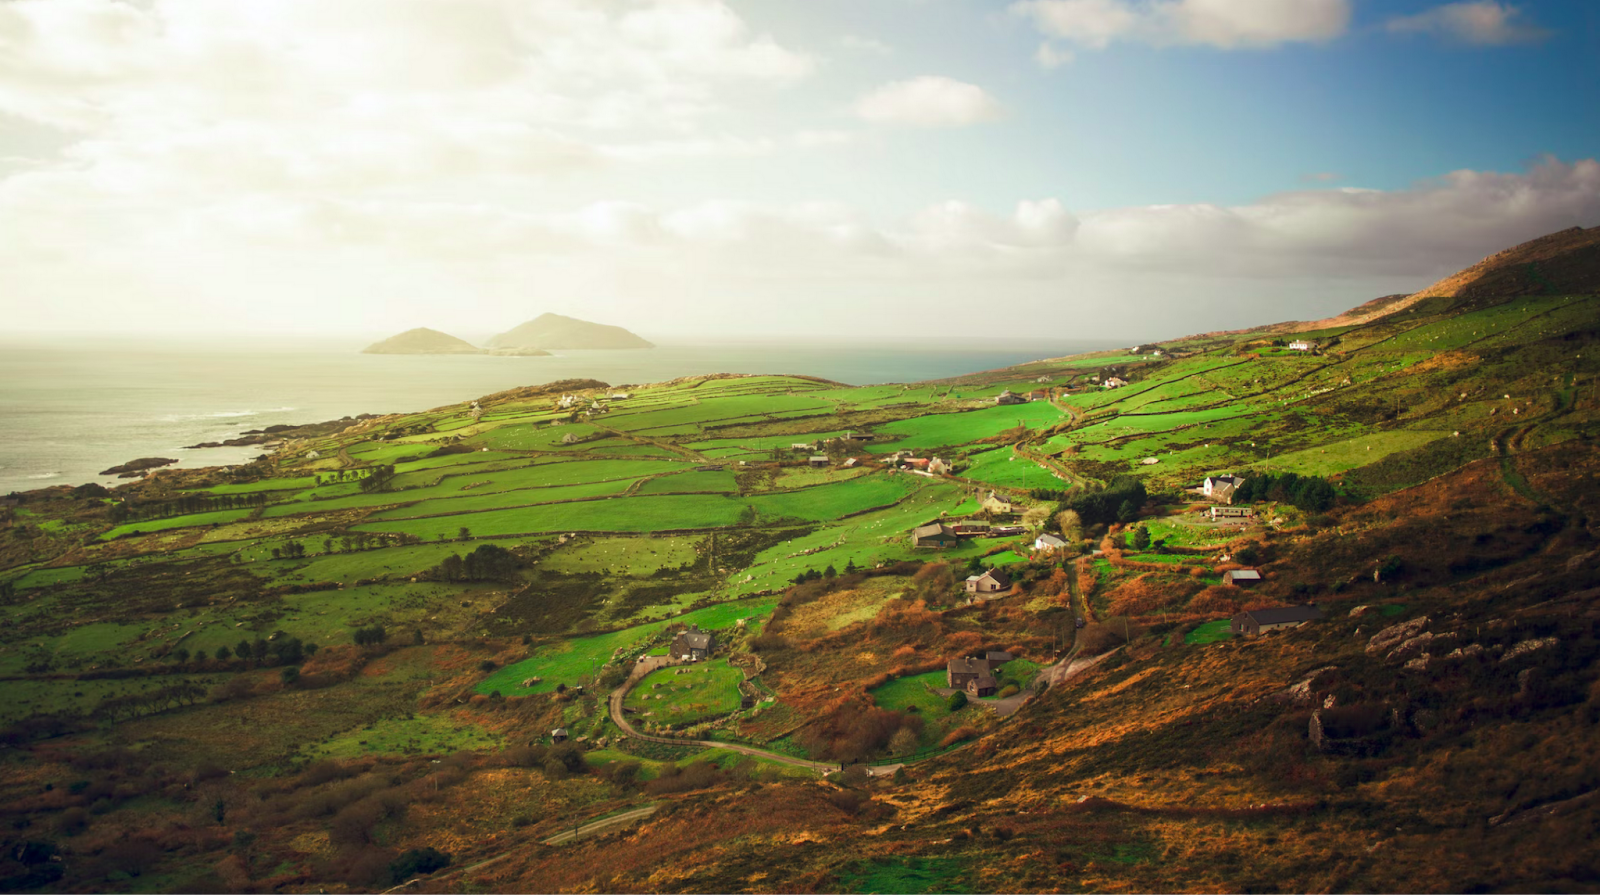 Photo of rolling hills in Ireland